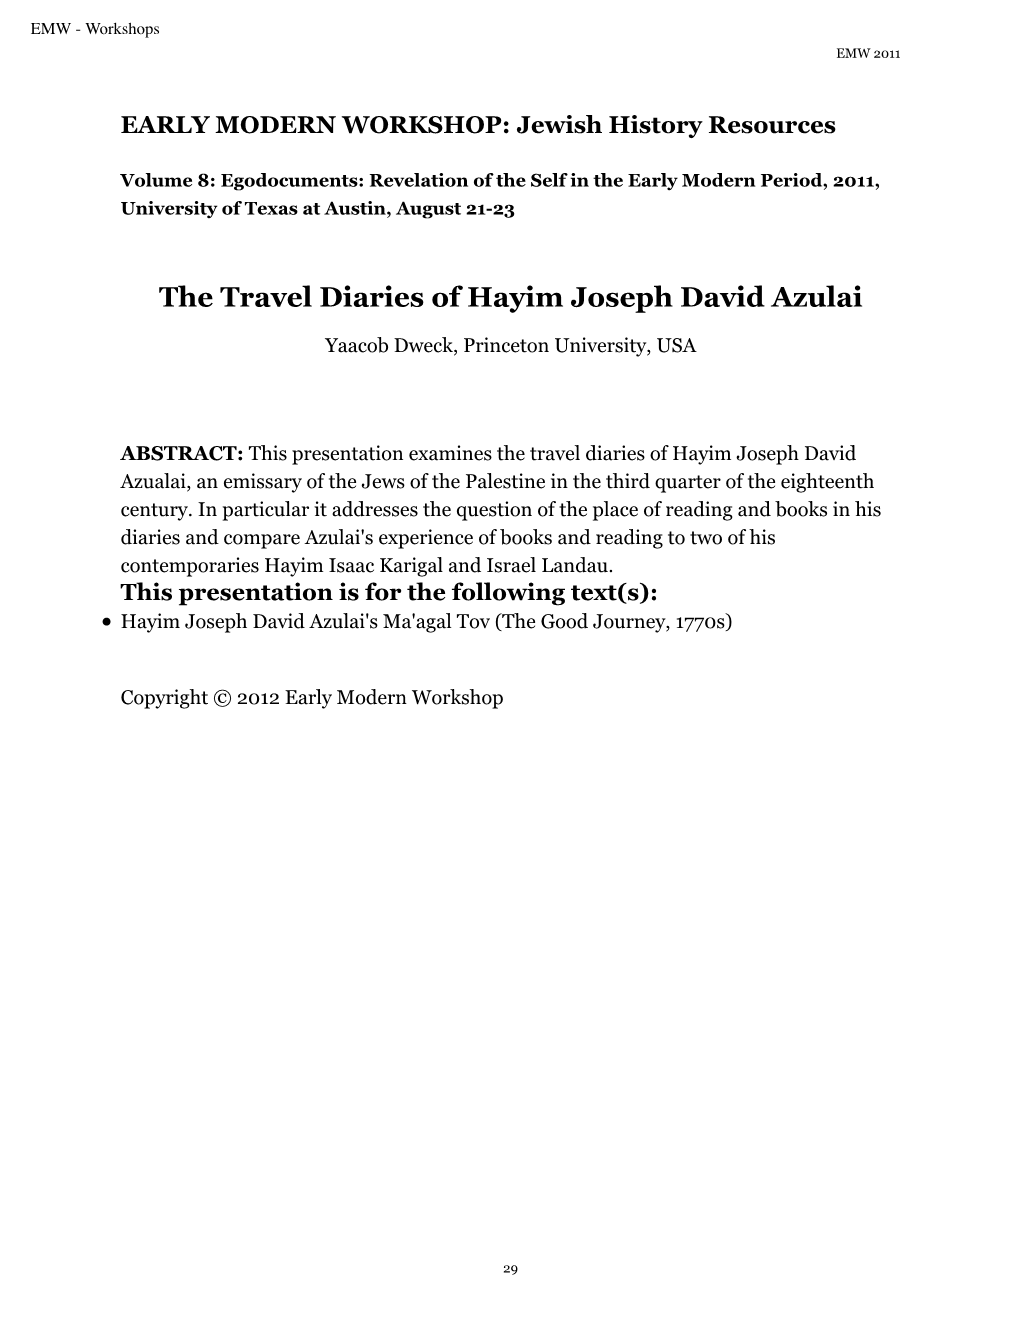 The Travel Diaries of Hayim Joseph David Azulai